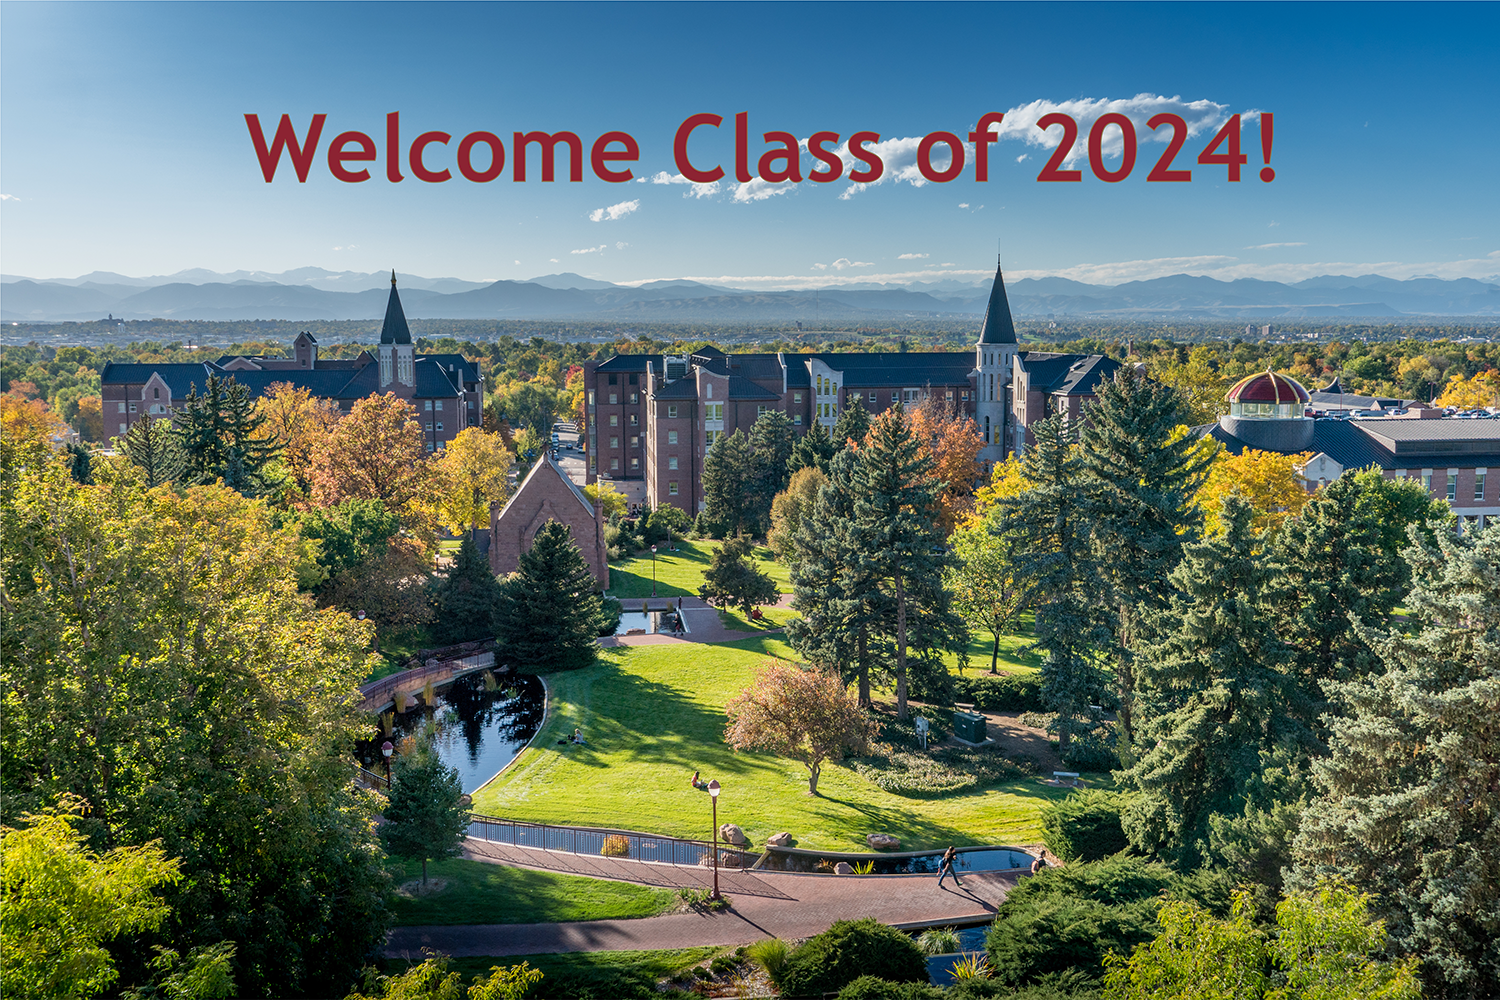 Class of 2024 University of Denver